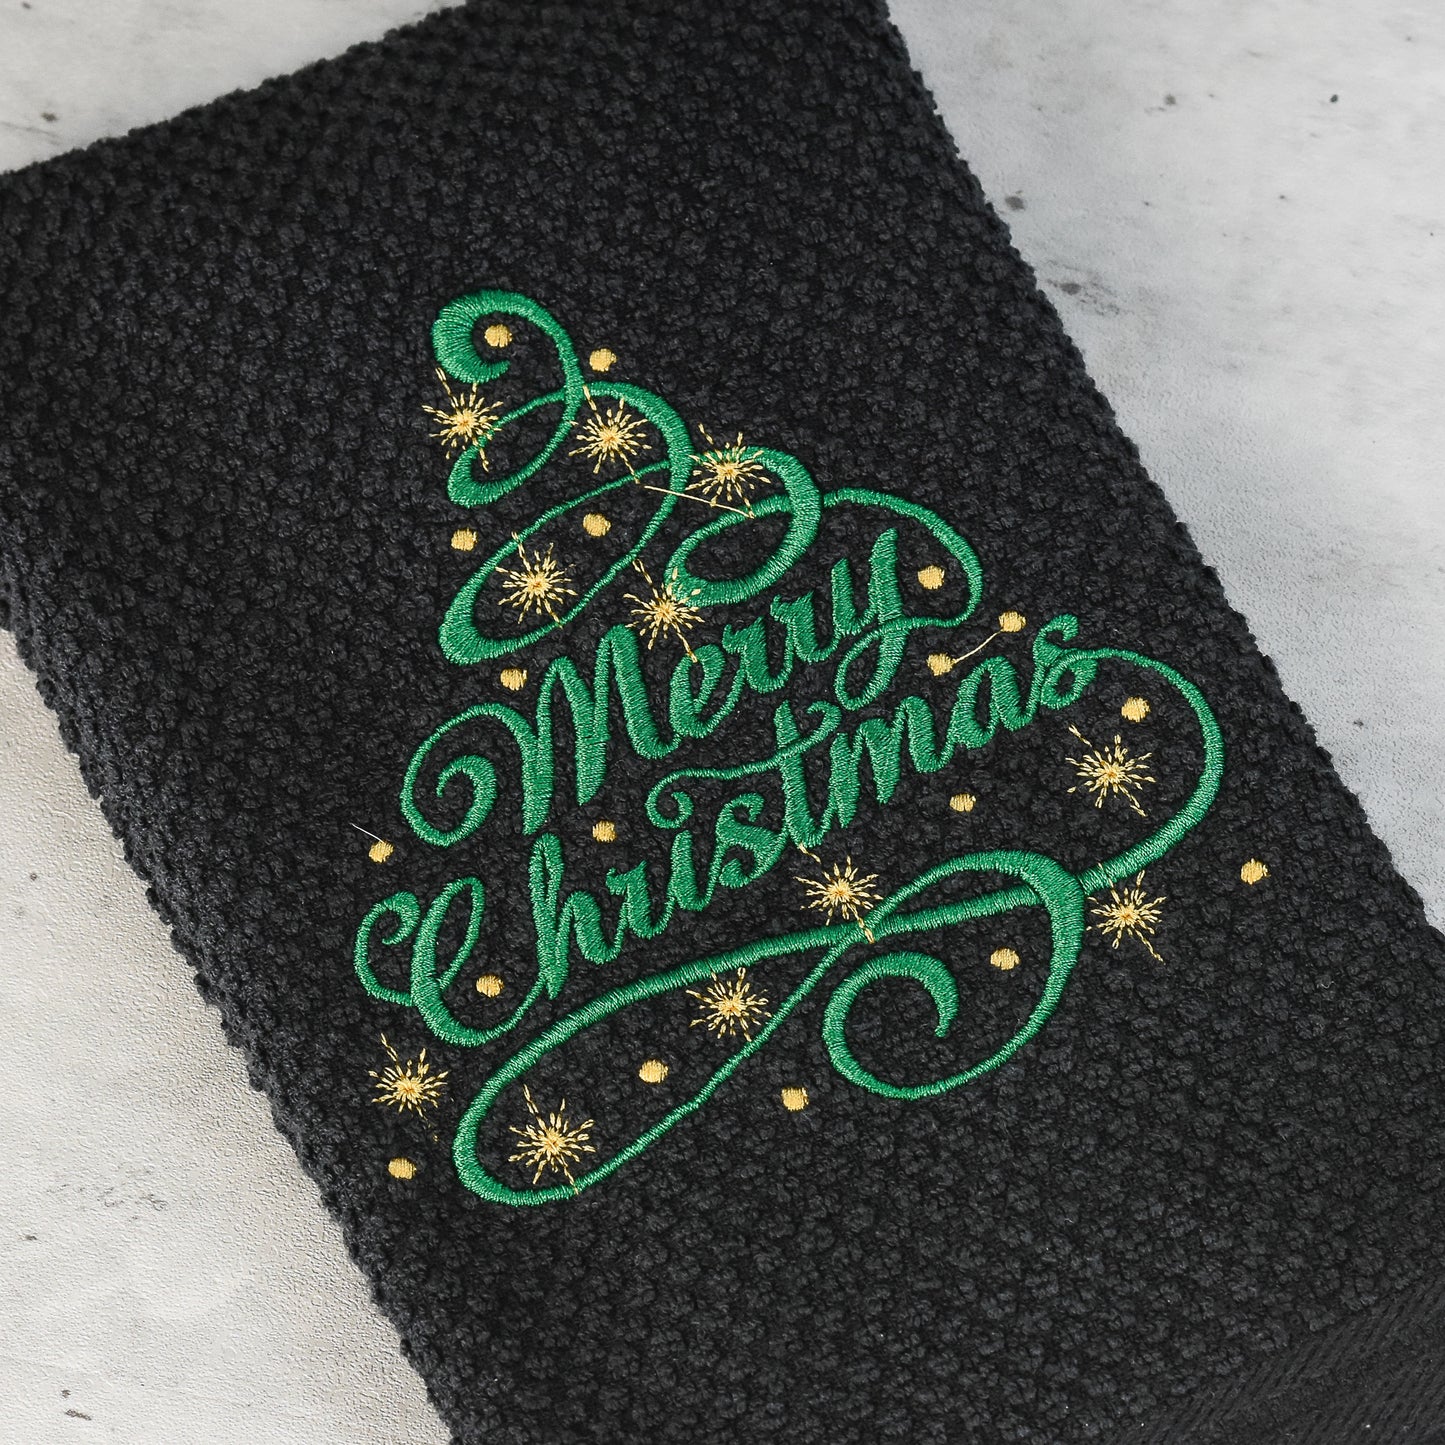 Merry Christmas Tree Towel - Embroidered Christmas Design